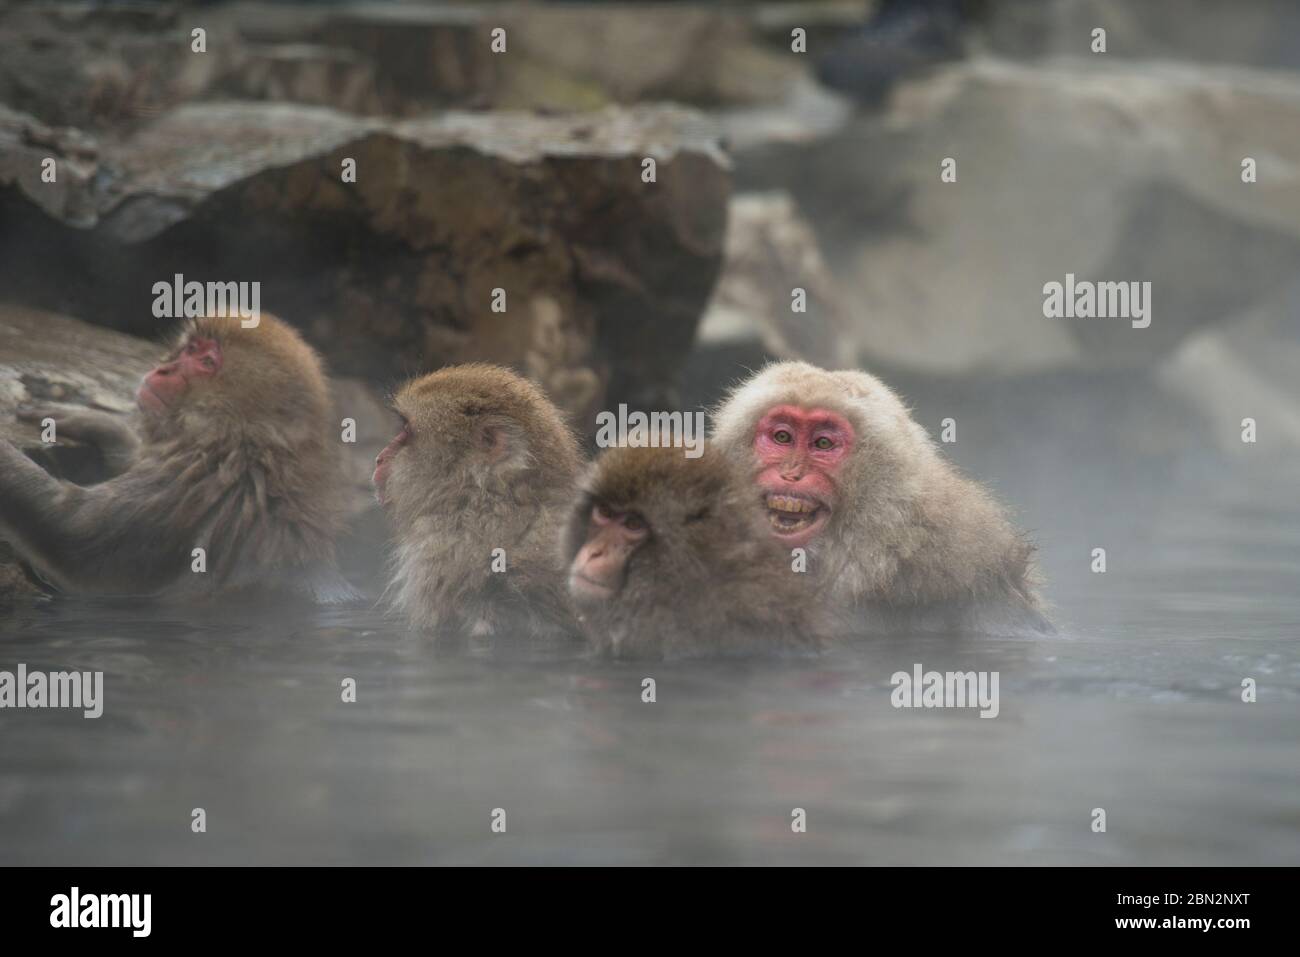 Japanese Macaque Monkey, Macaca fuscata, shrieking as shocked in hot spring bath, Jigokudani Yaenkoen Monkey Park, Yamanouchi, Nagano, Japan Stock Photo